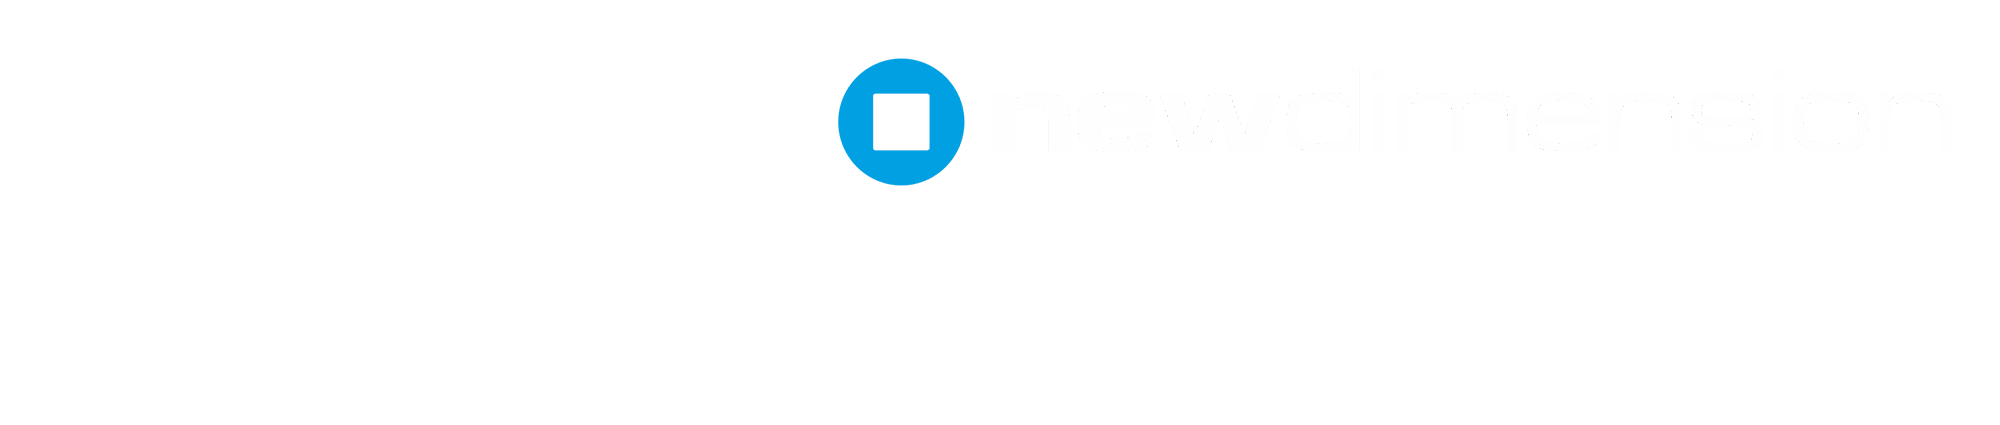 digitransf-logo21w